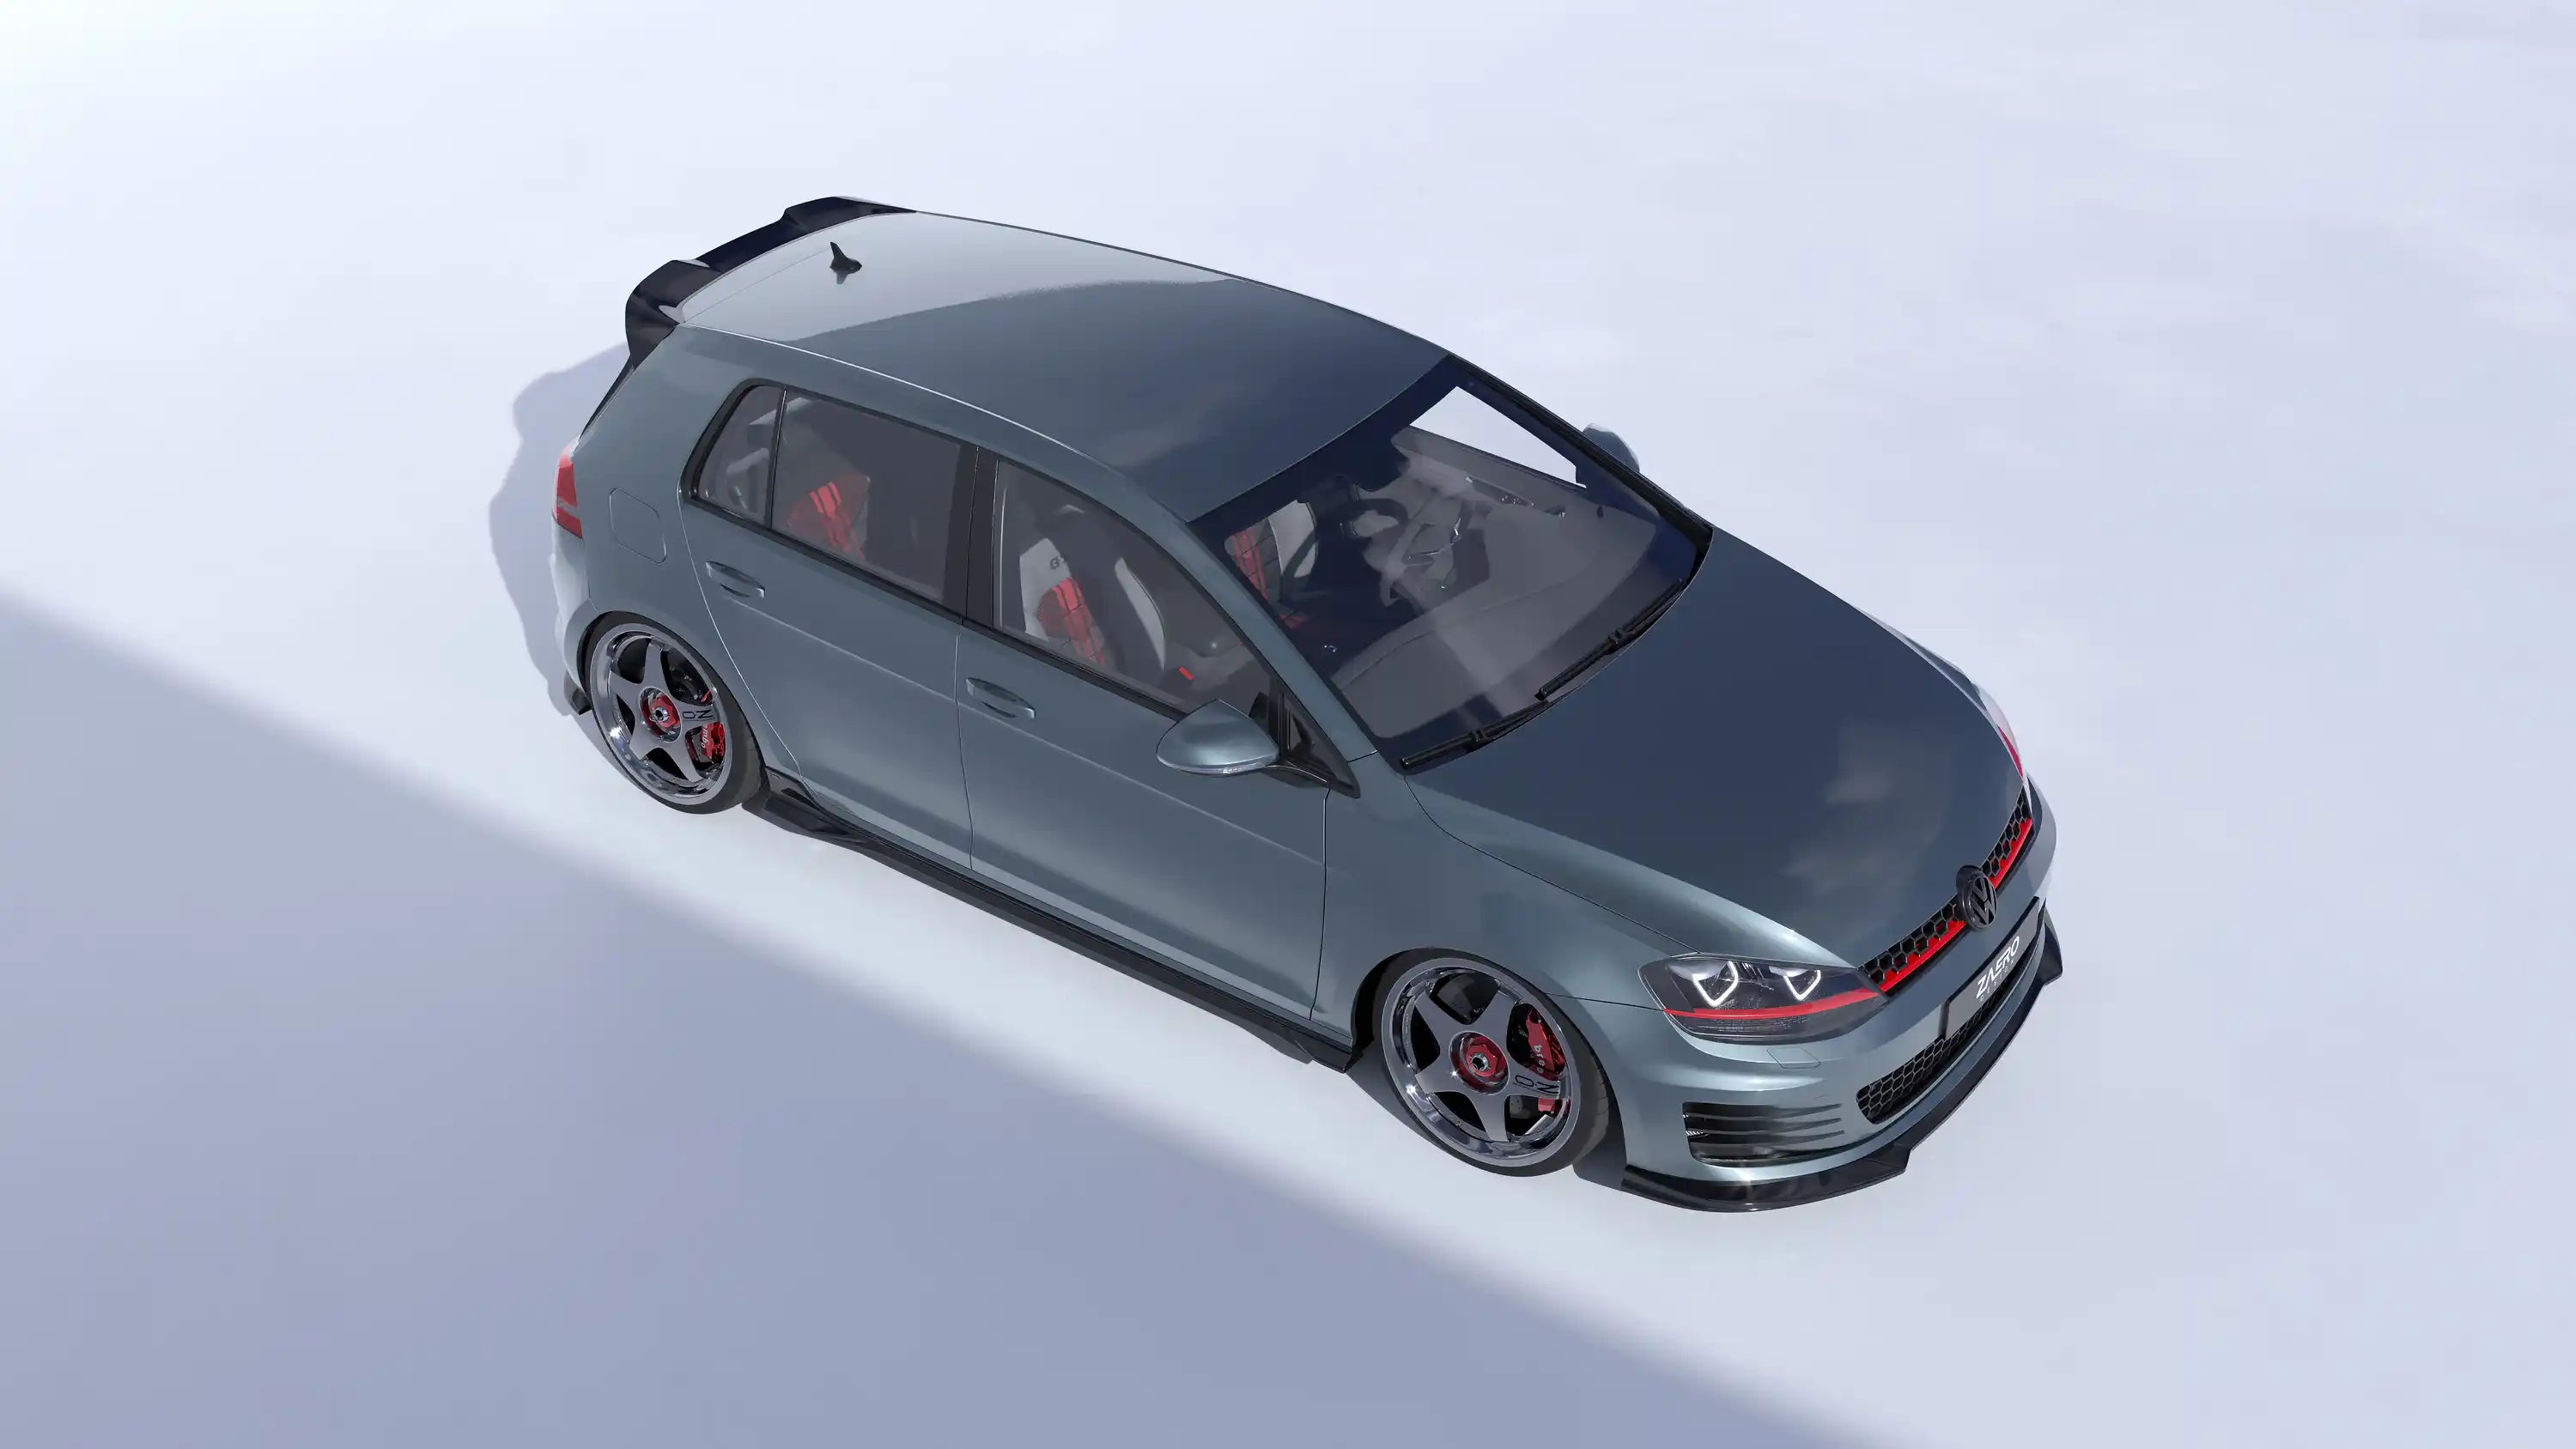 VW Golf GTI Mk7 EVO-1 Gloss Black Front Splitter by ZAERO (2013-2017), Front Lips & Splitters, Zaero Design - AUTOID | Premium Automotive Accessories